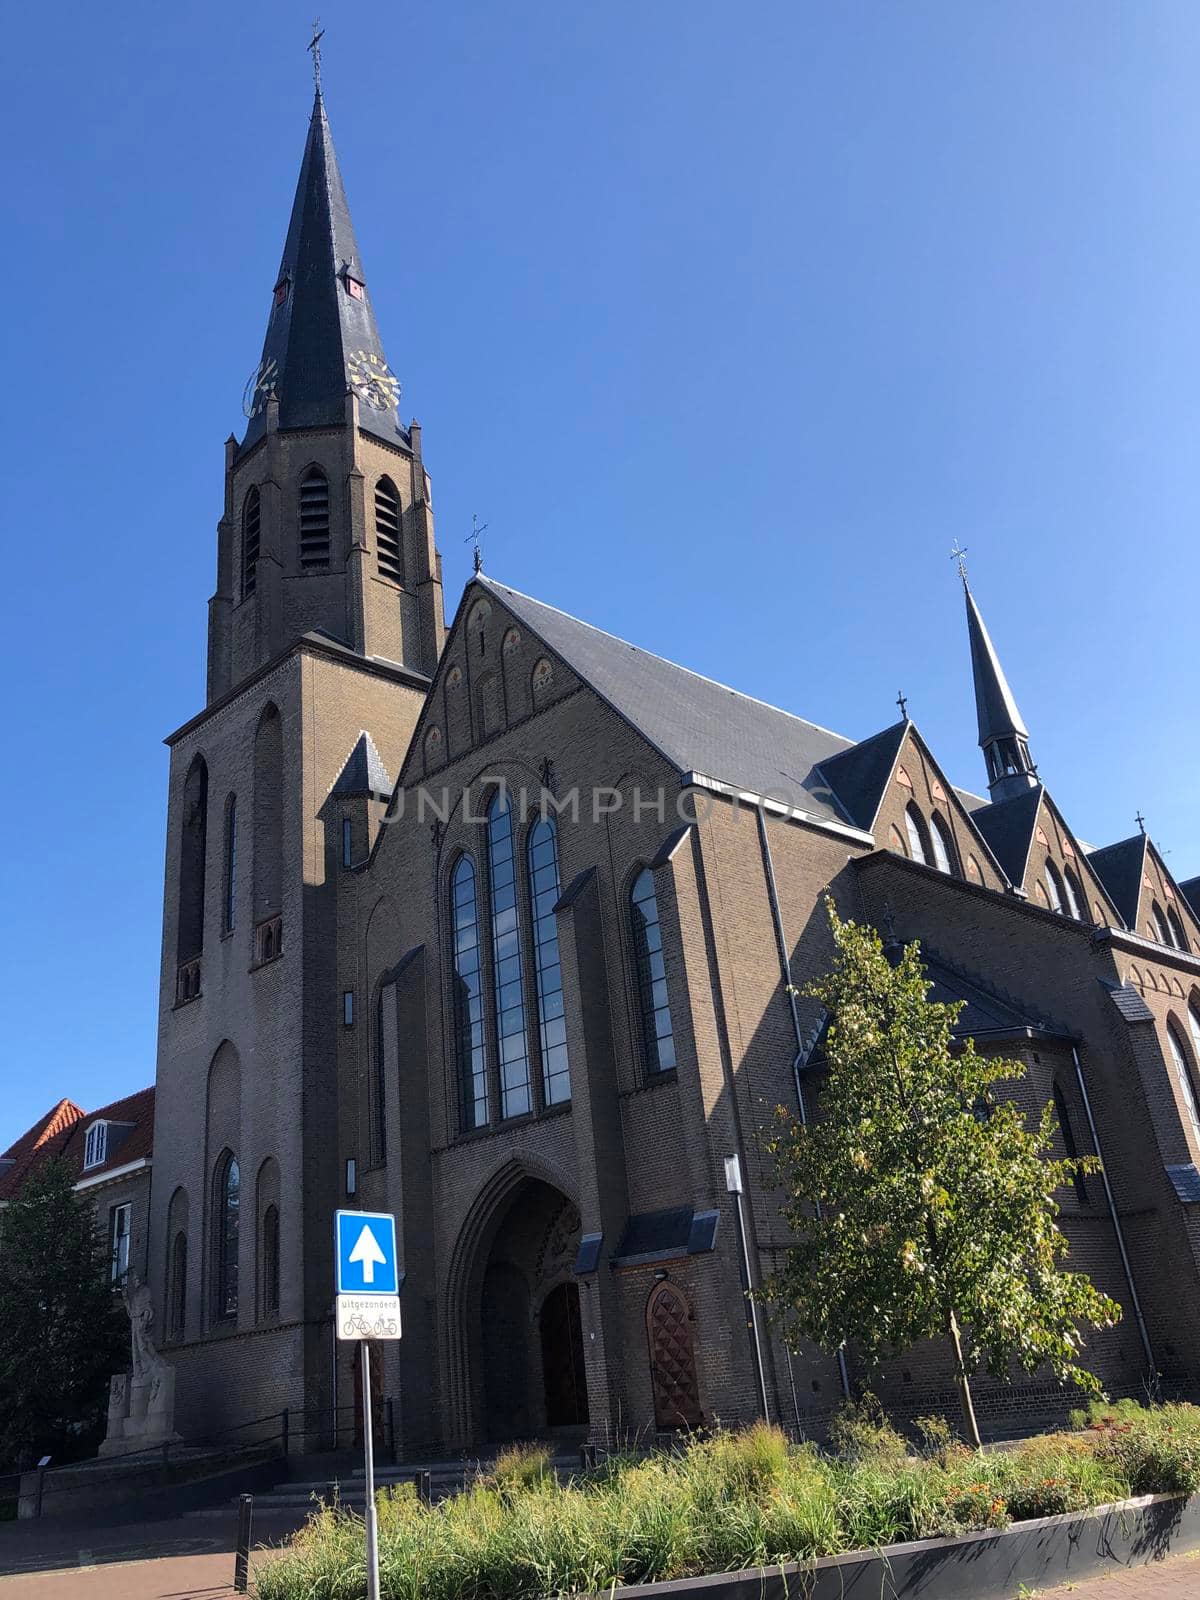 Sint Bonifatius church in Lichtenvoorde, The Netherlands